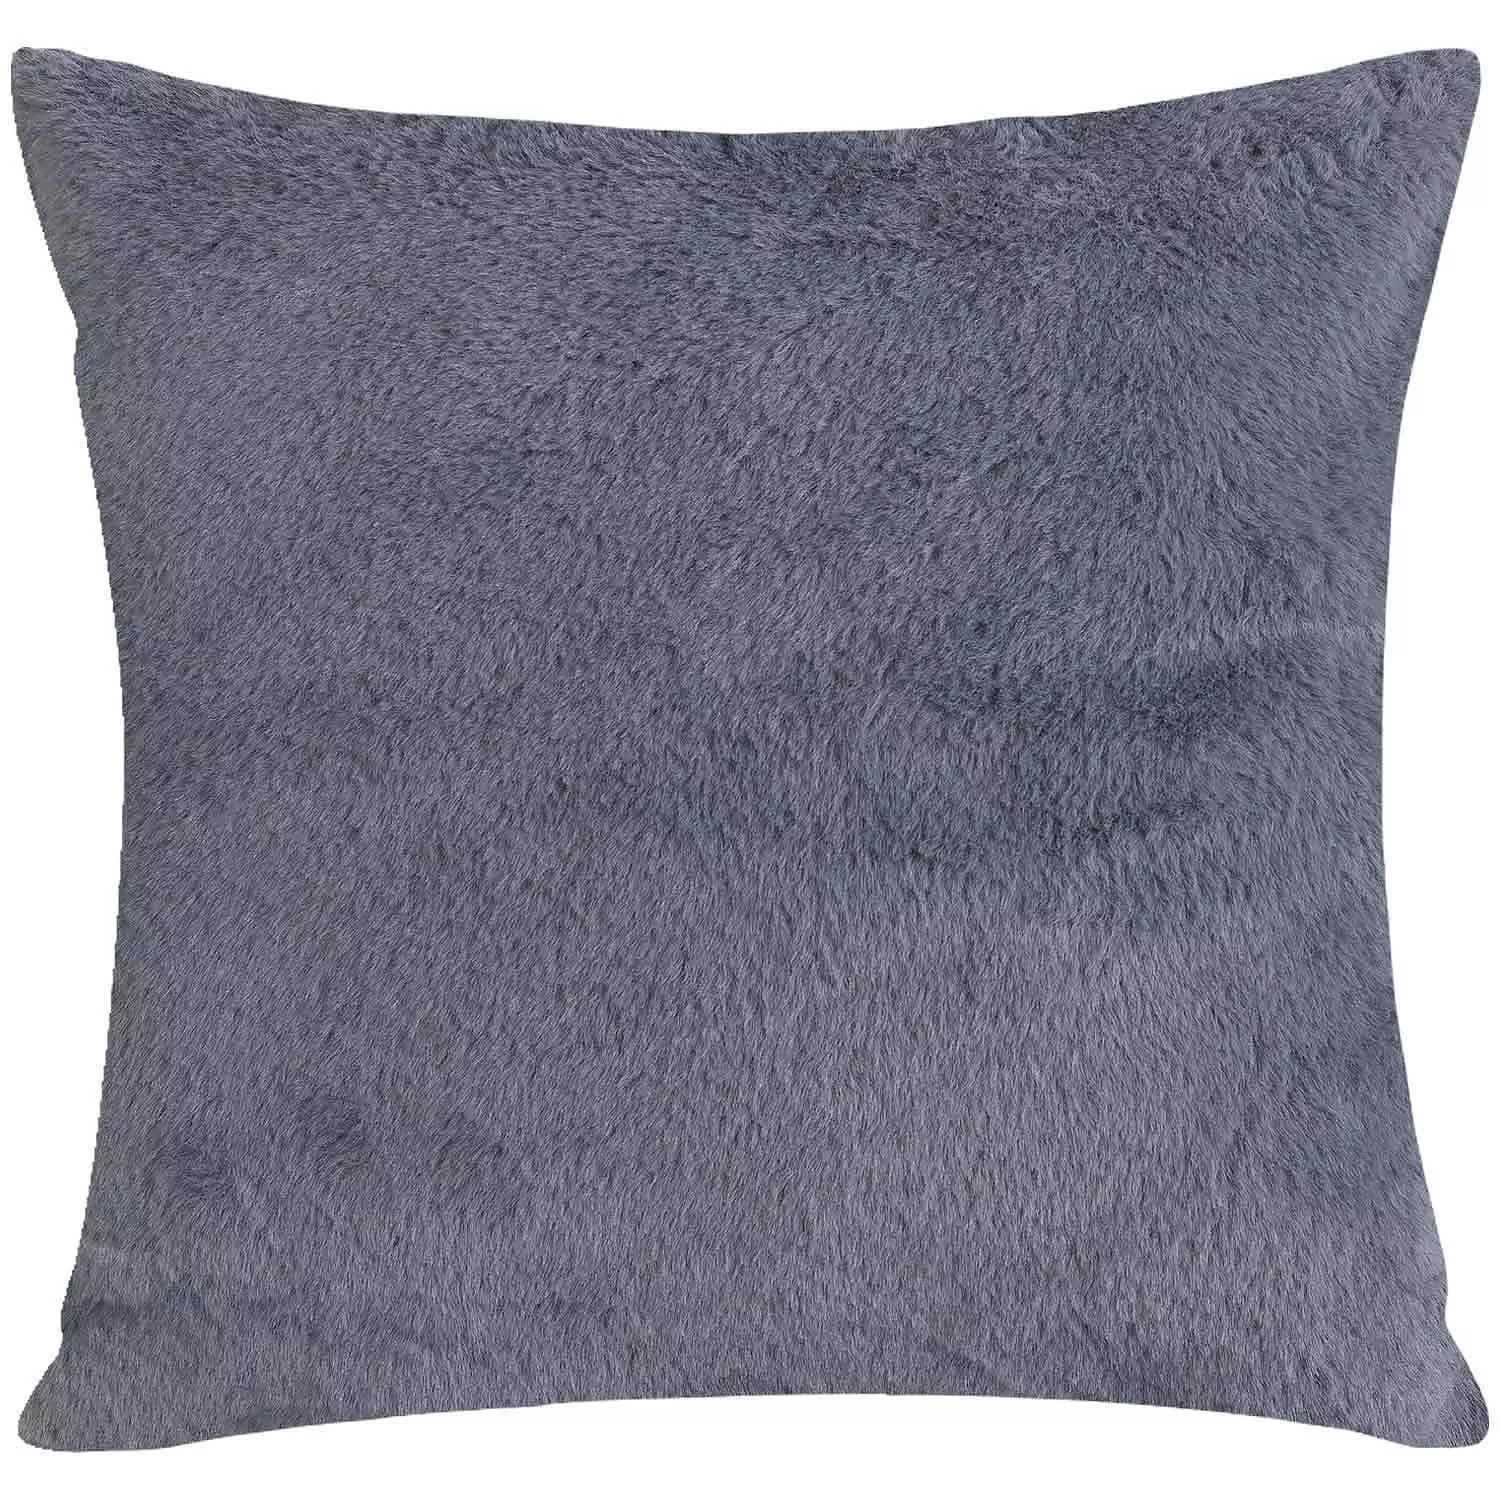 Plush cushion, 18"x18", grey